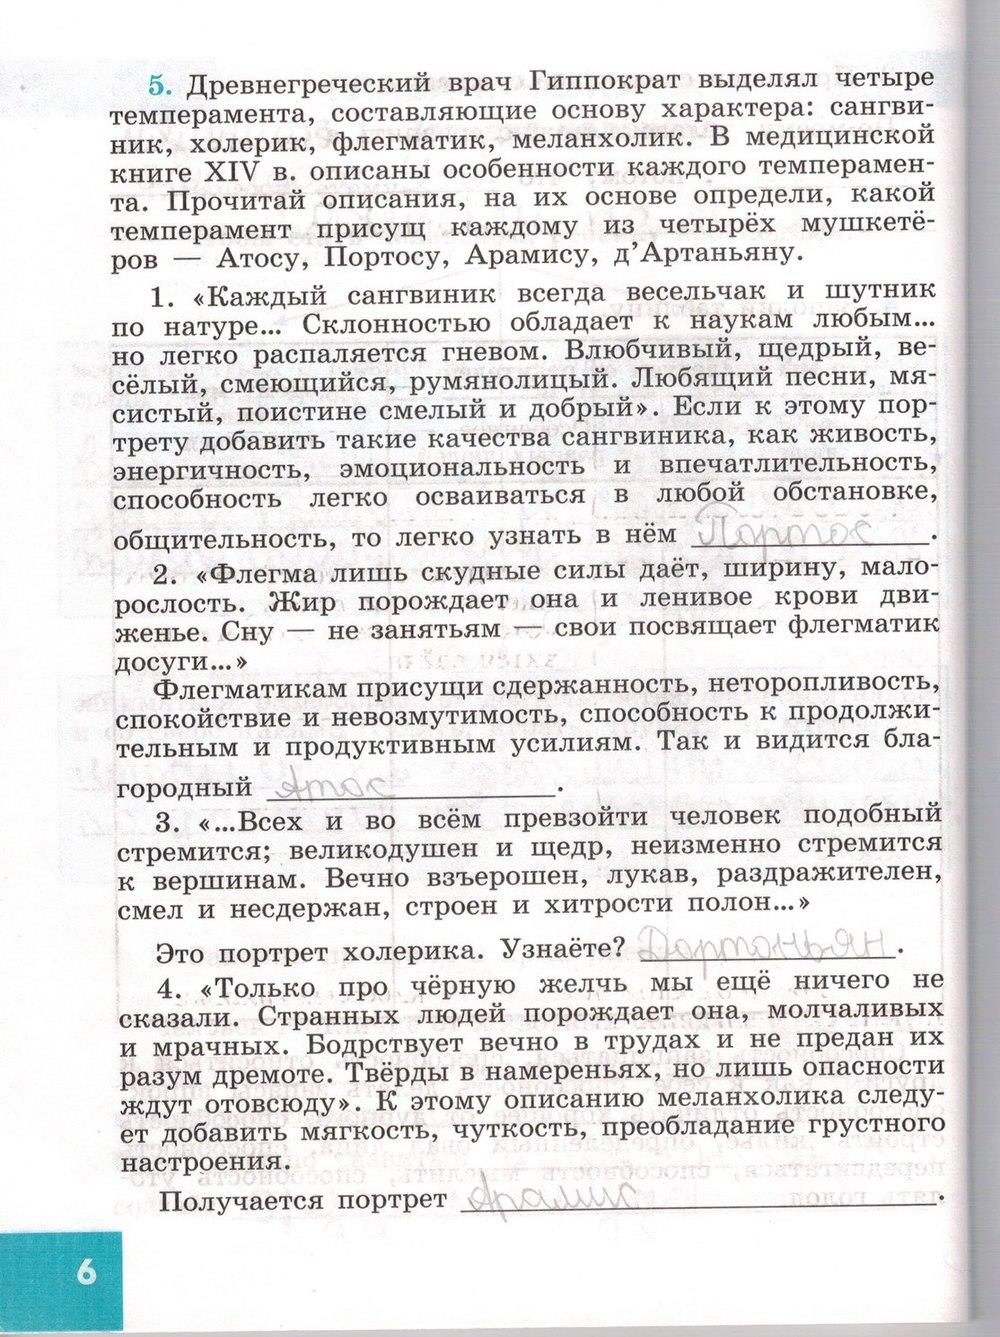 гдз 5 класс рабочая тетрадь страница 6 обществознание Иванова, Хотеенкова